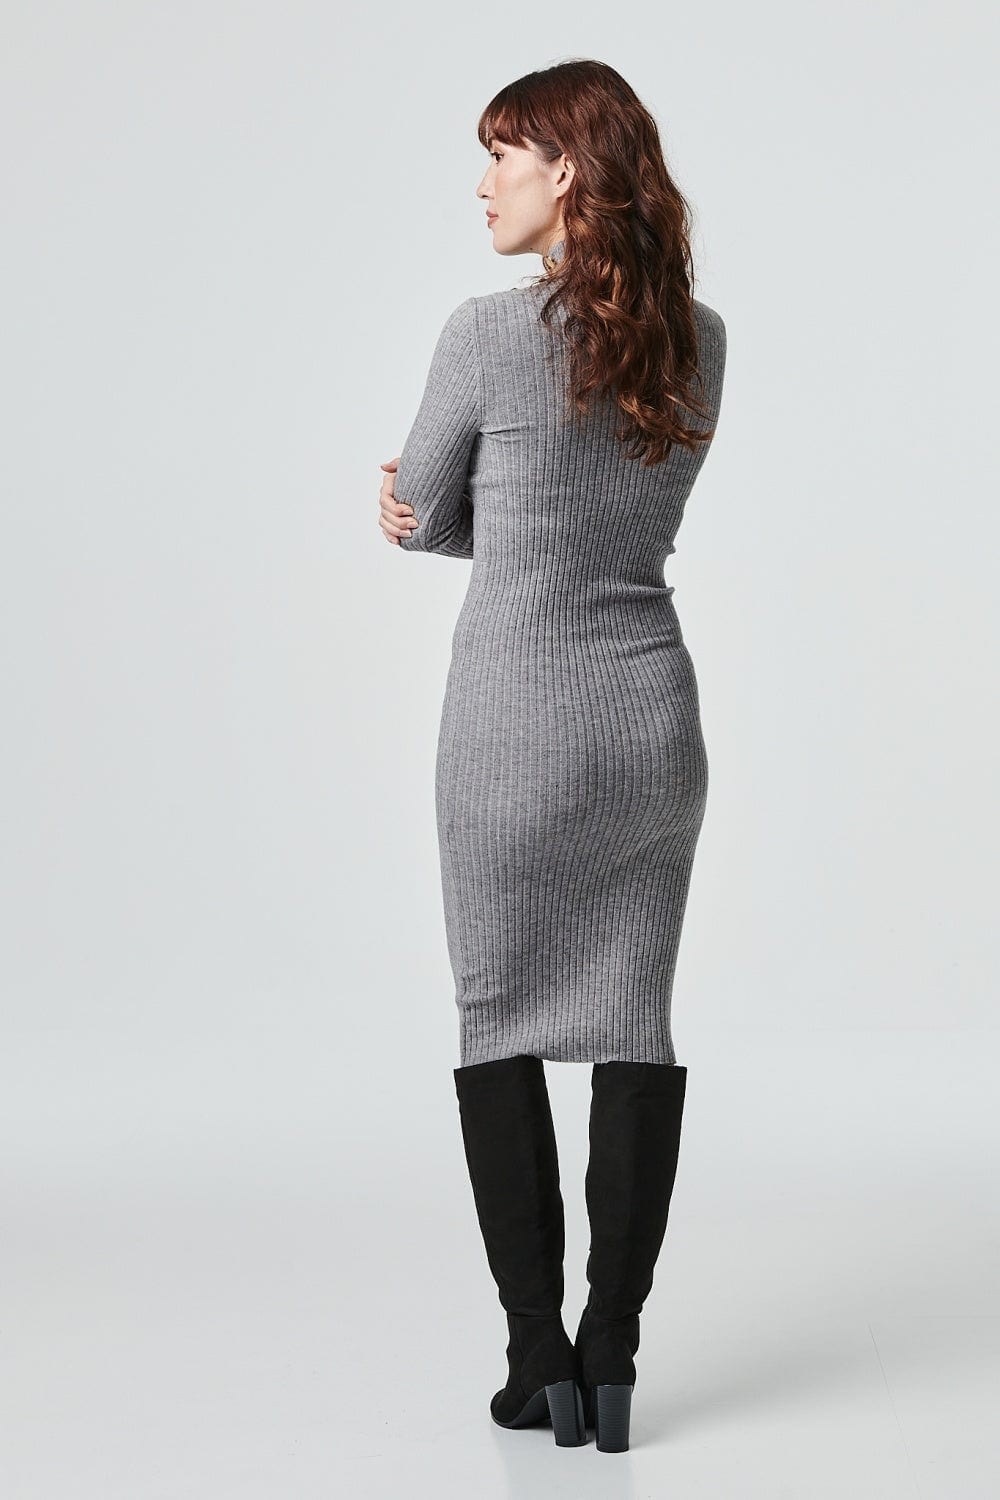 Grey | High Neck Bodycon Knit Dress